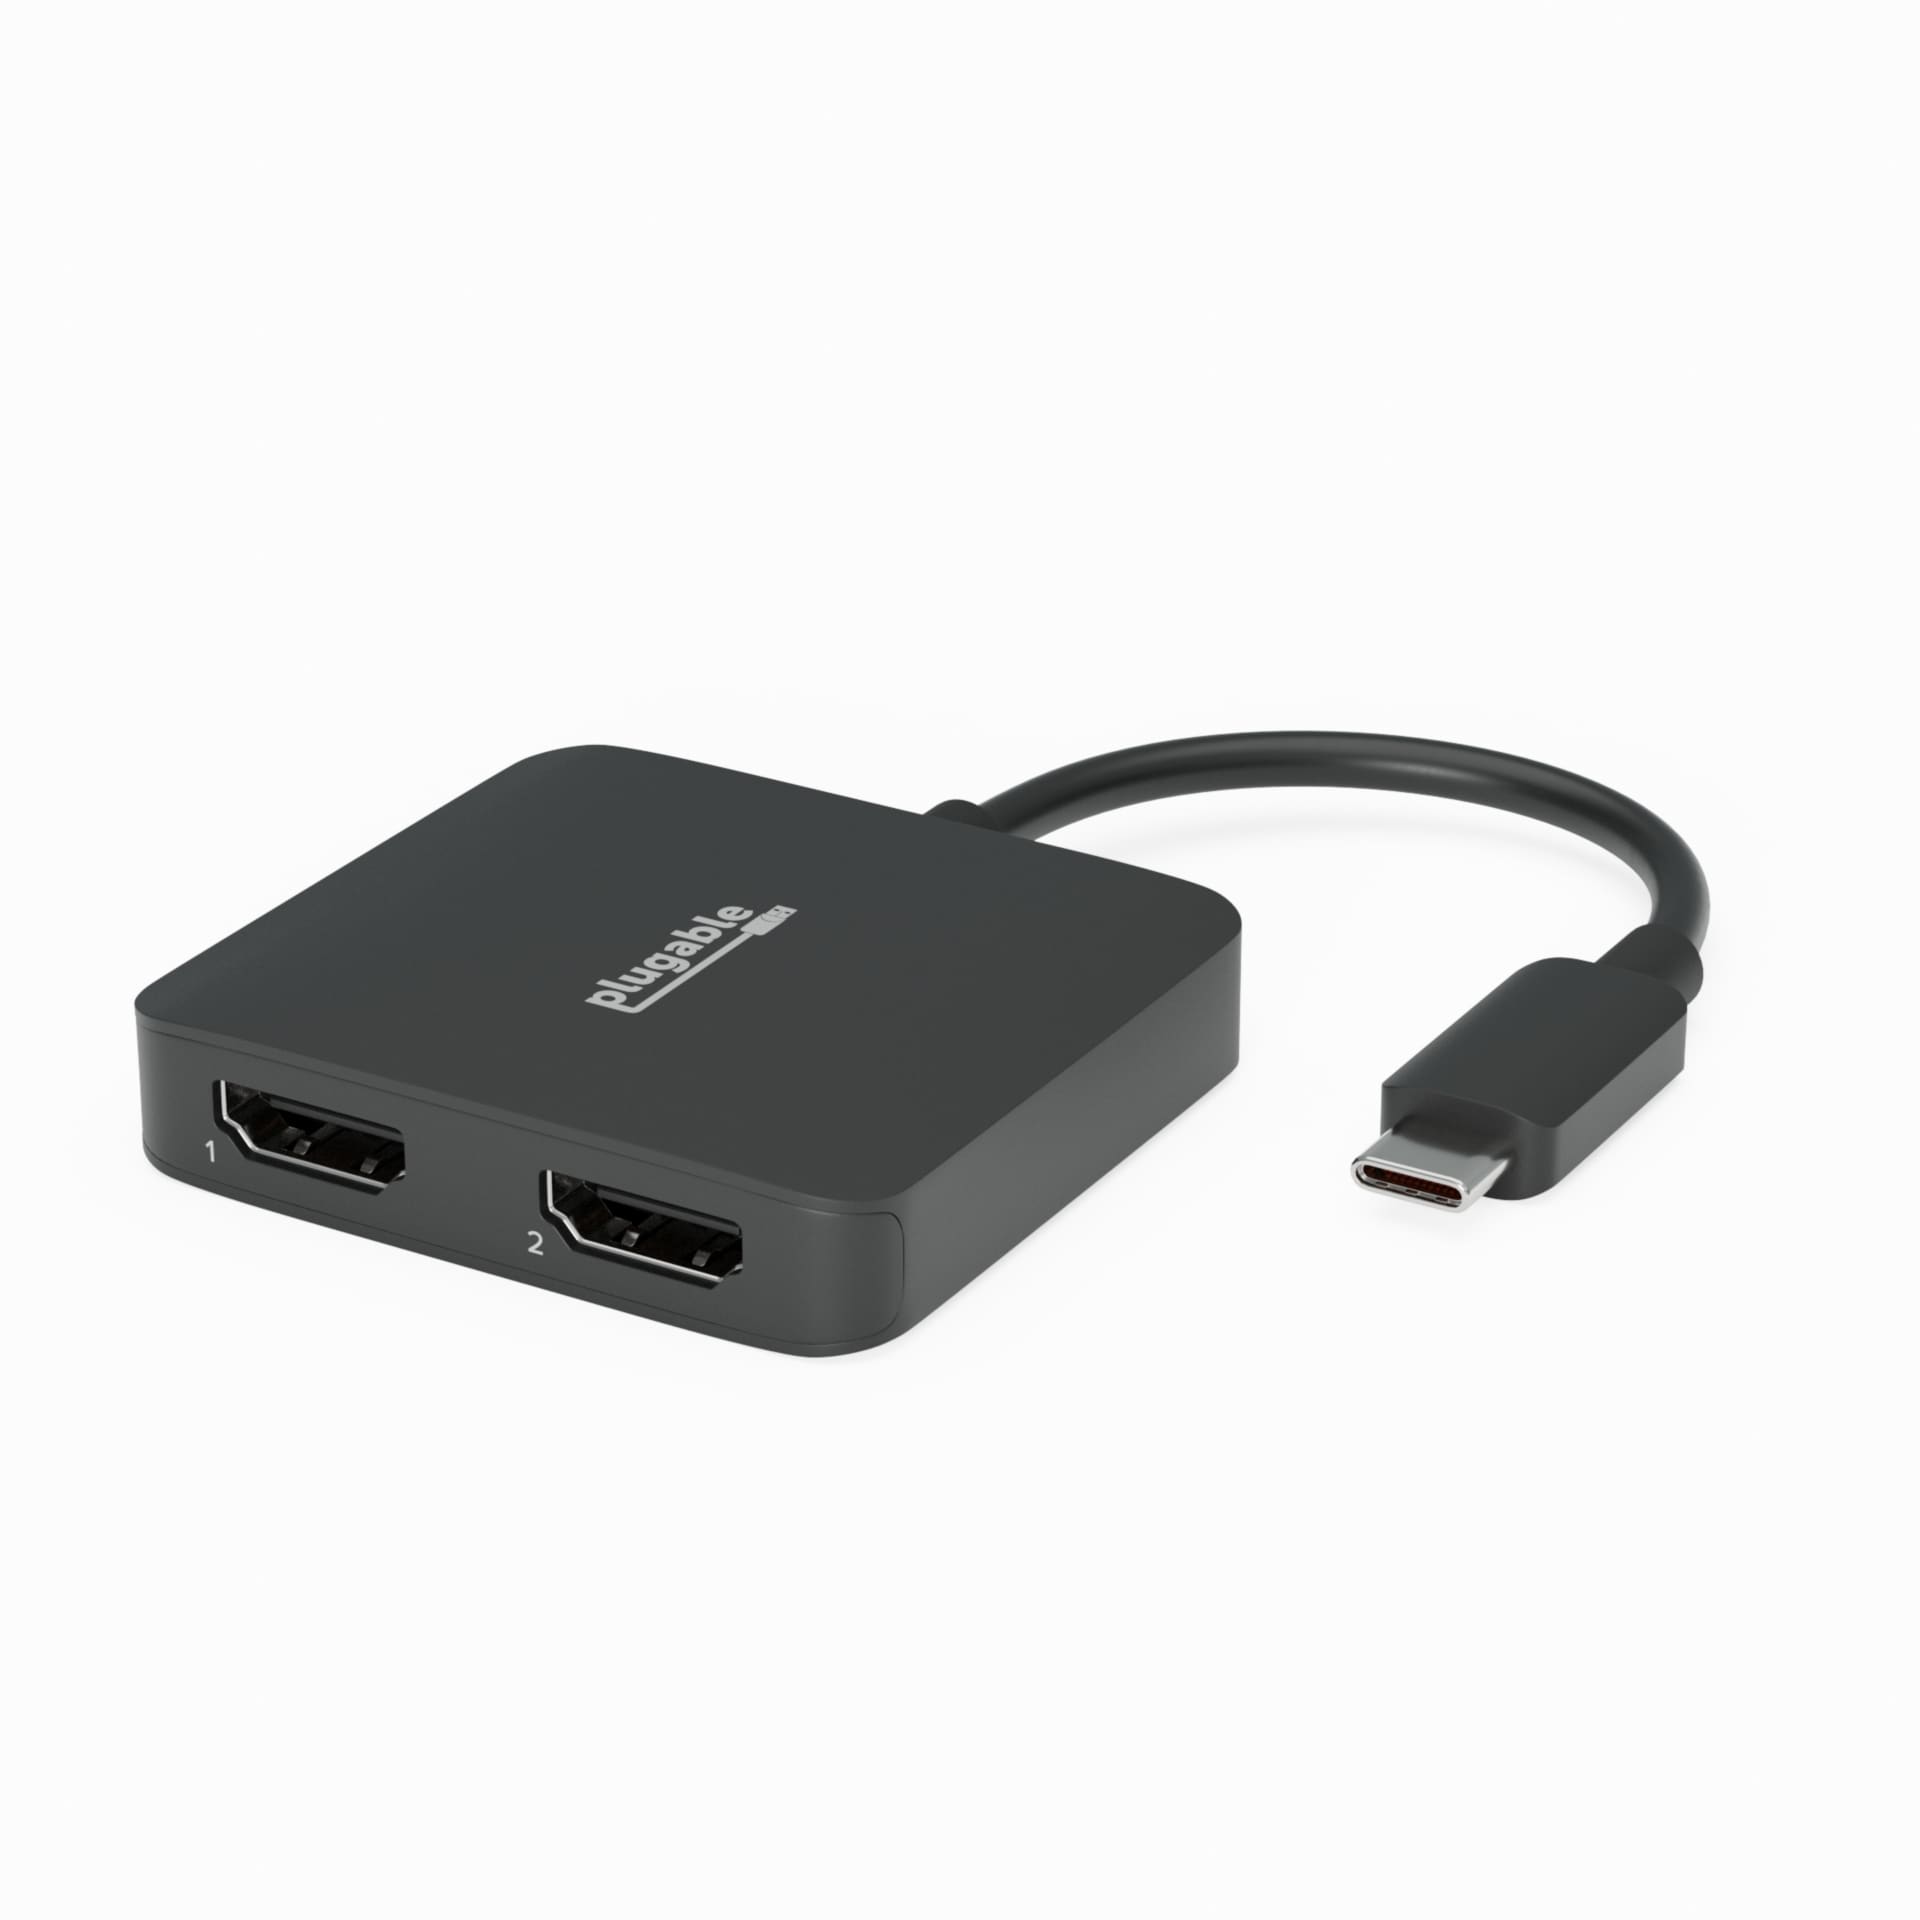 Plugable USB C to HDMI Adapter for Dual Monitors, 4K 60Hz USB C Hub